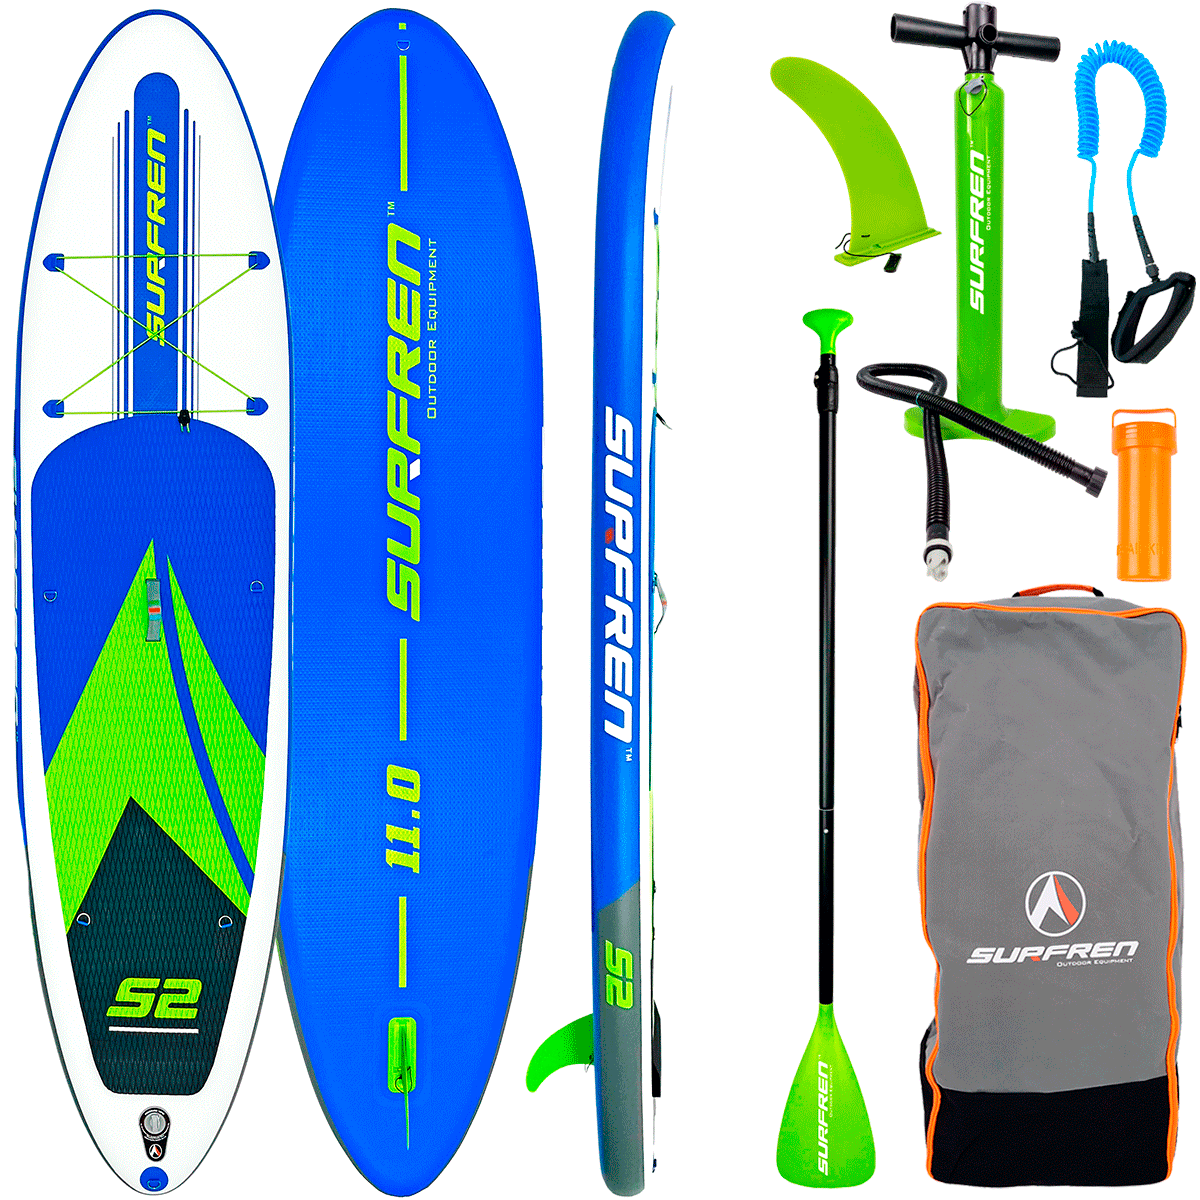 Tabla Paddle Surf Hinchable Surfren S2 11'0" - azul-verde - 